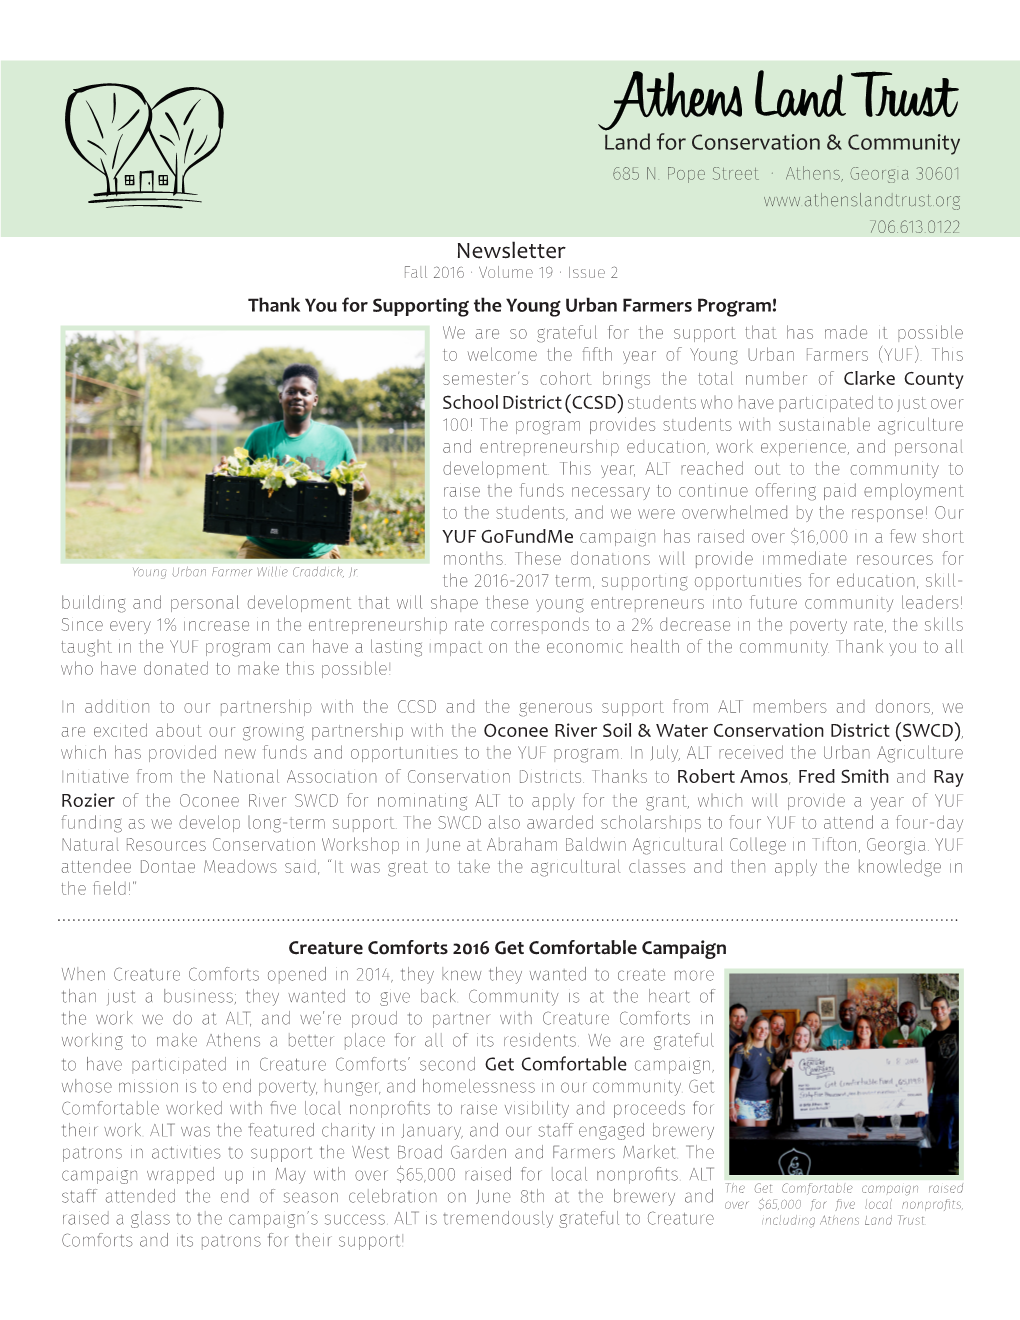 Land for Conservation & Community Newsletter